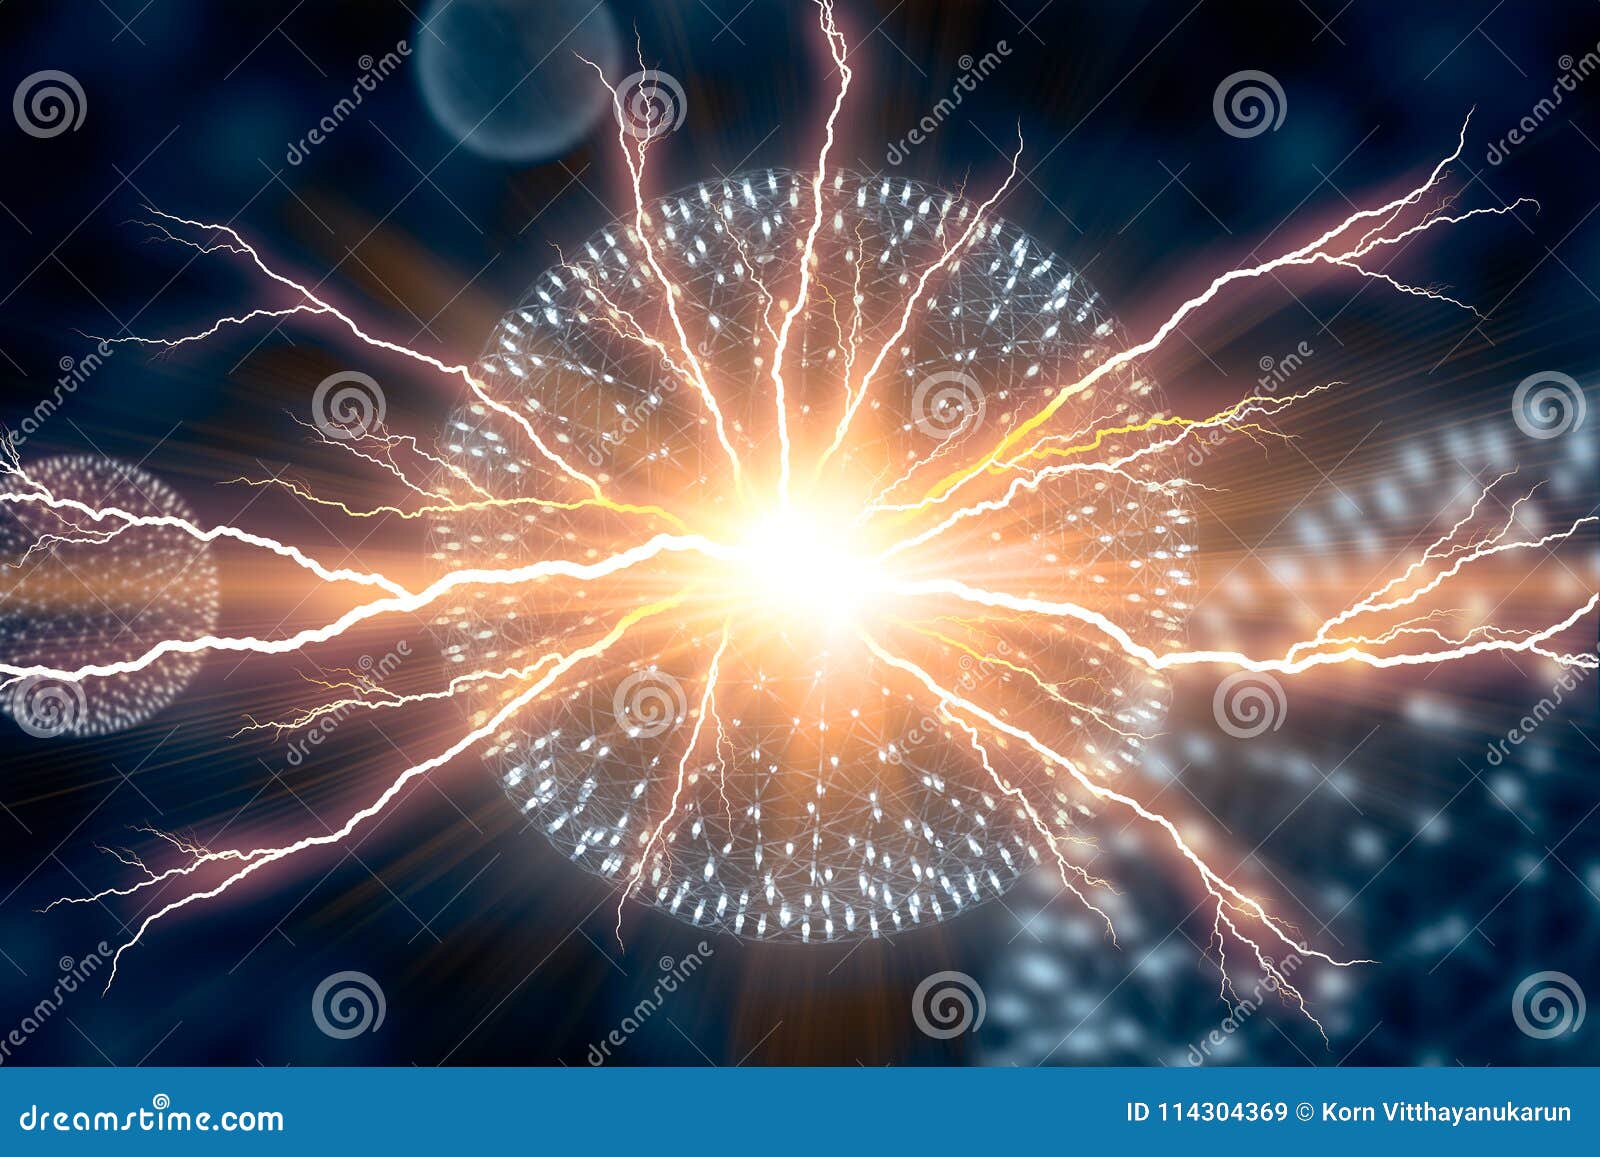 cg model electricity nucleus atom nuclear explode